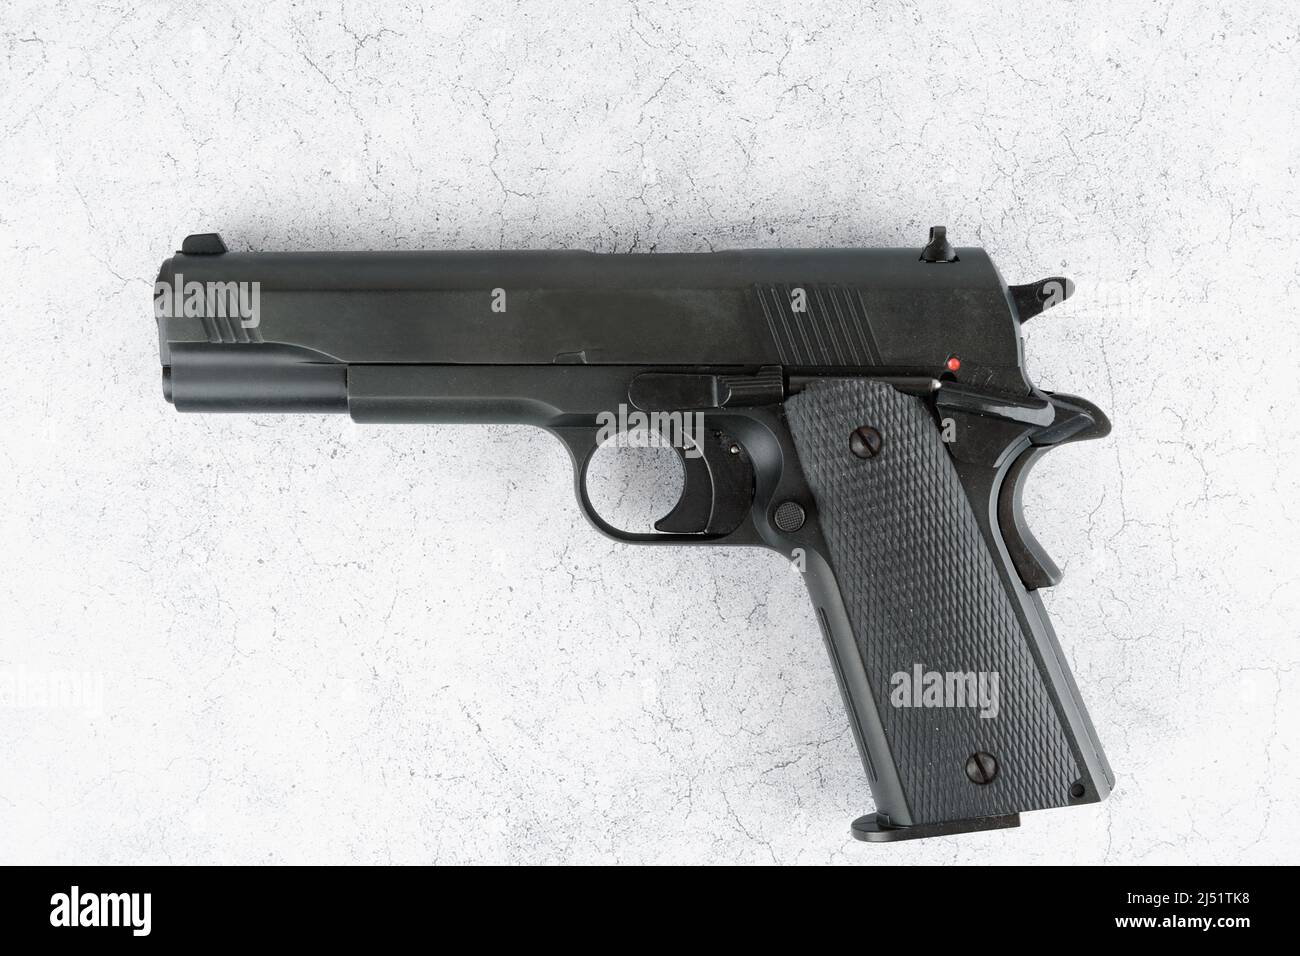 Black semi-automatic pistol on concrete backdrop Stock Photo